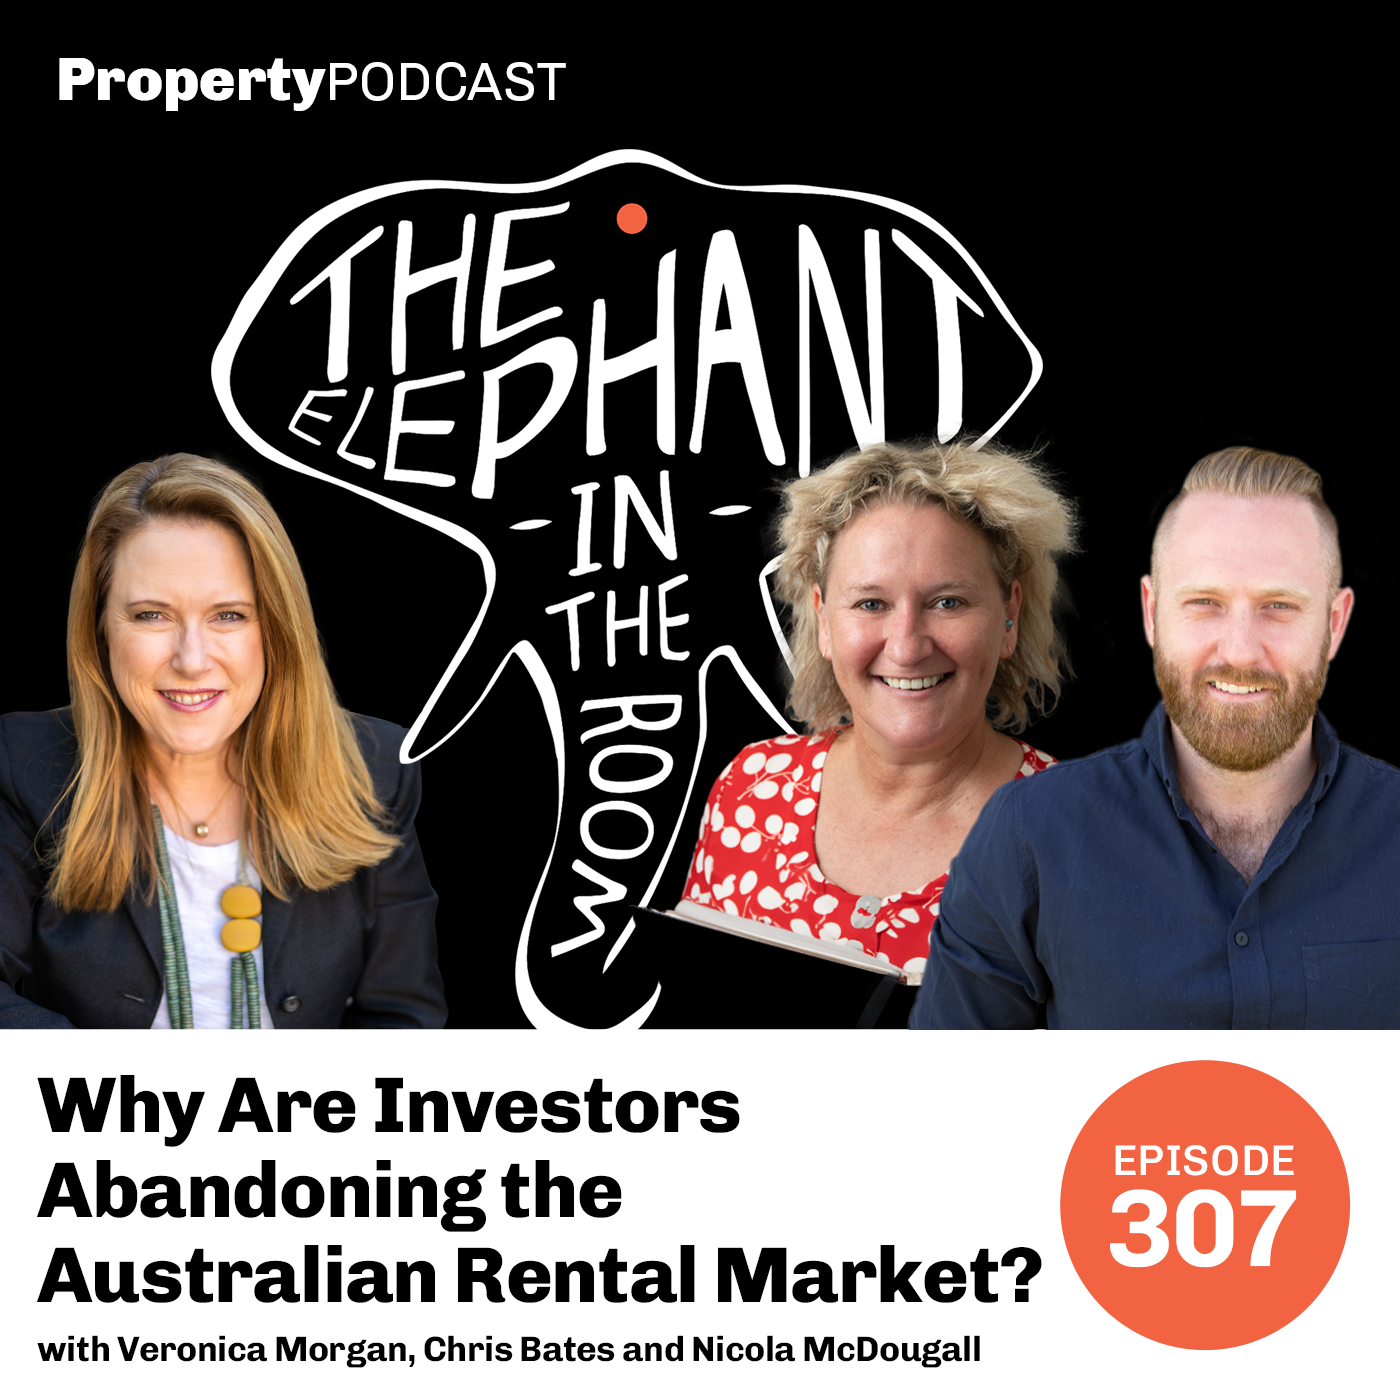 Why Are Investors Abandoning the Australian Rental Market?